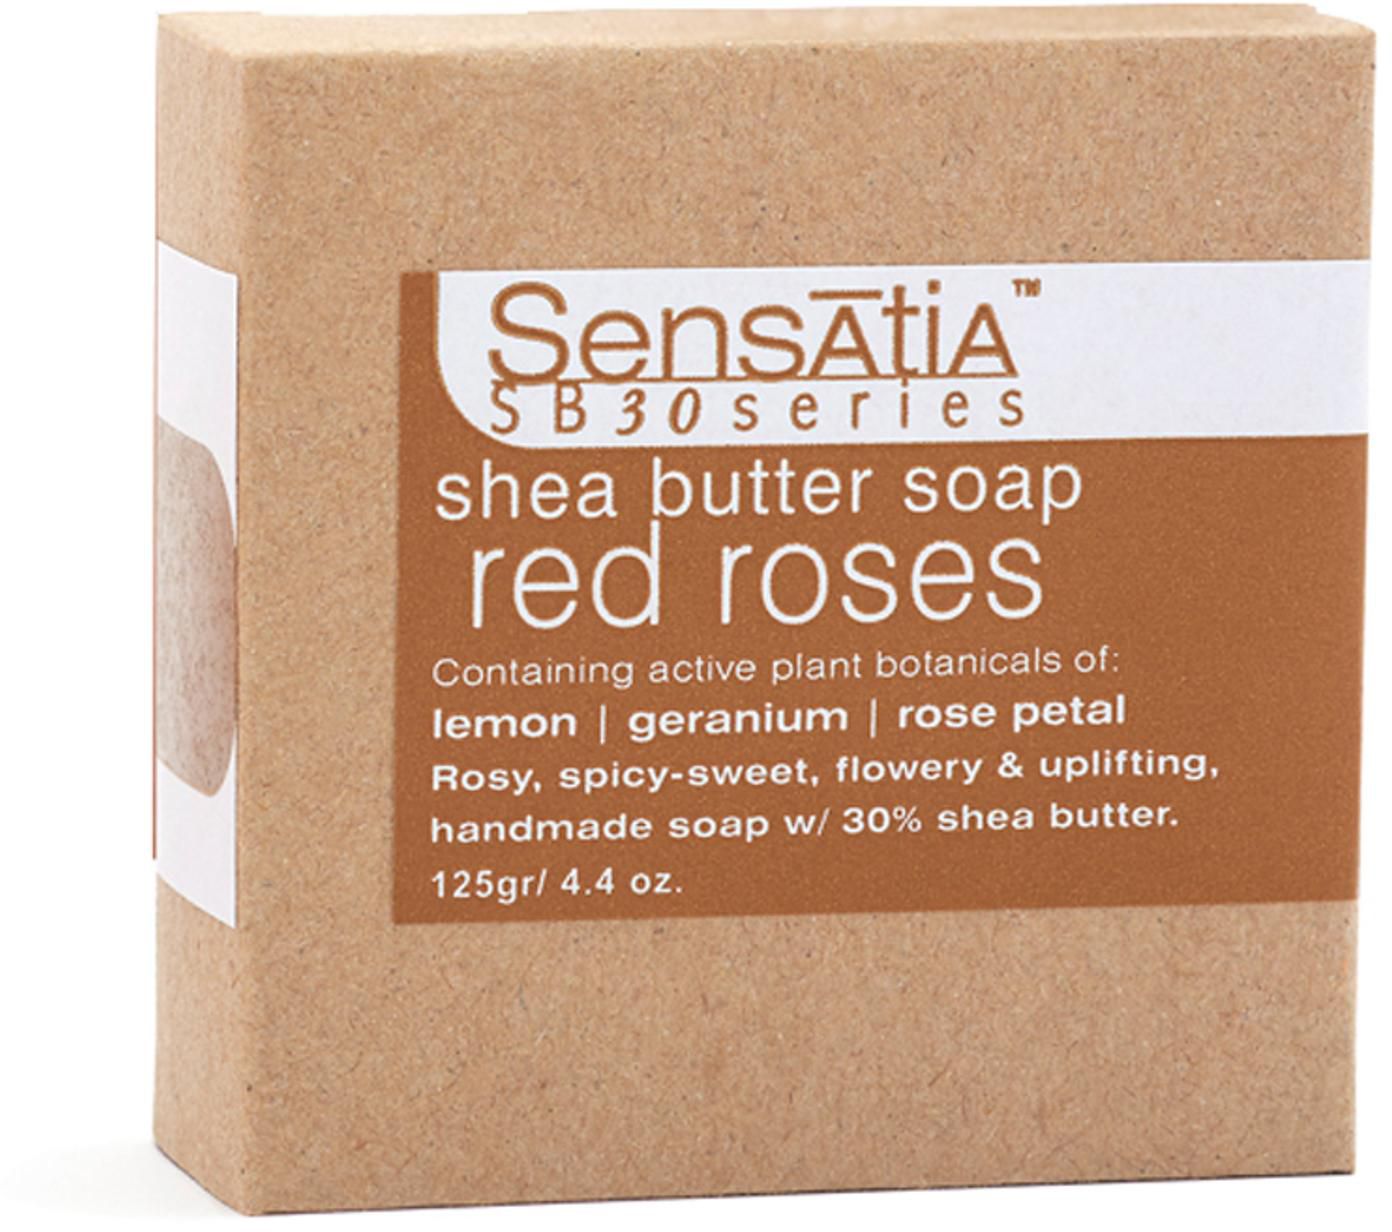 Sensatia Red Roses Shea Butter Soap 125g